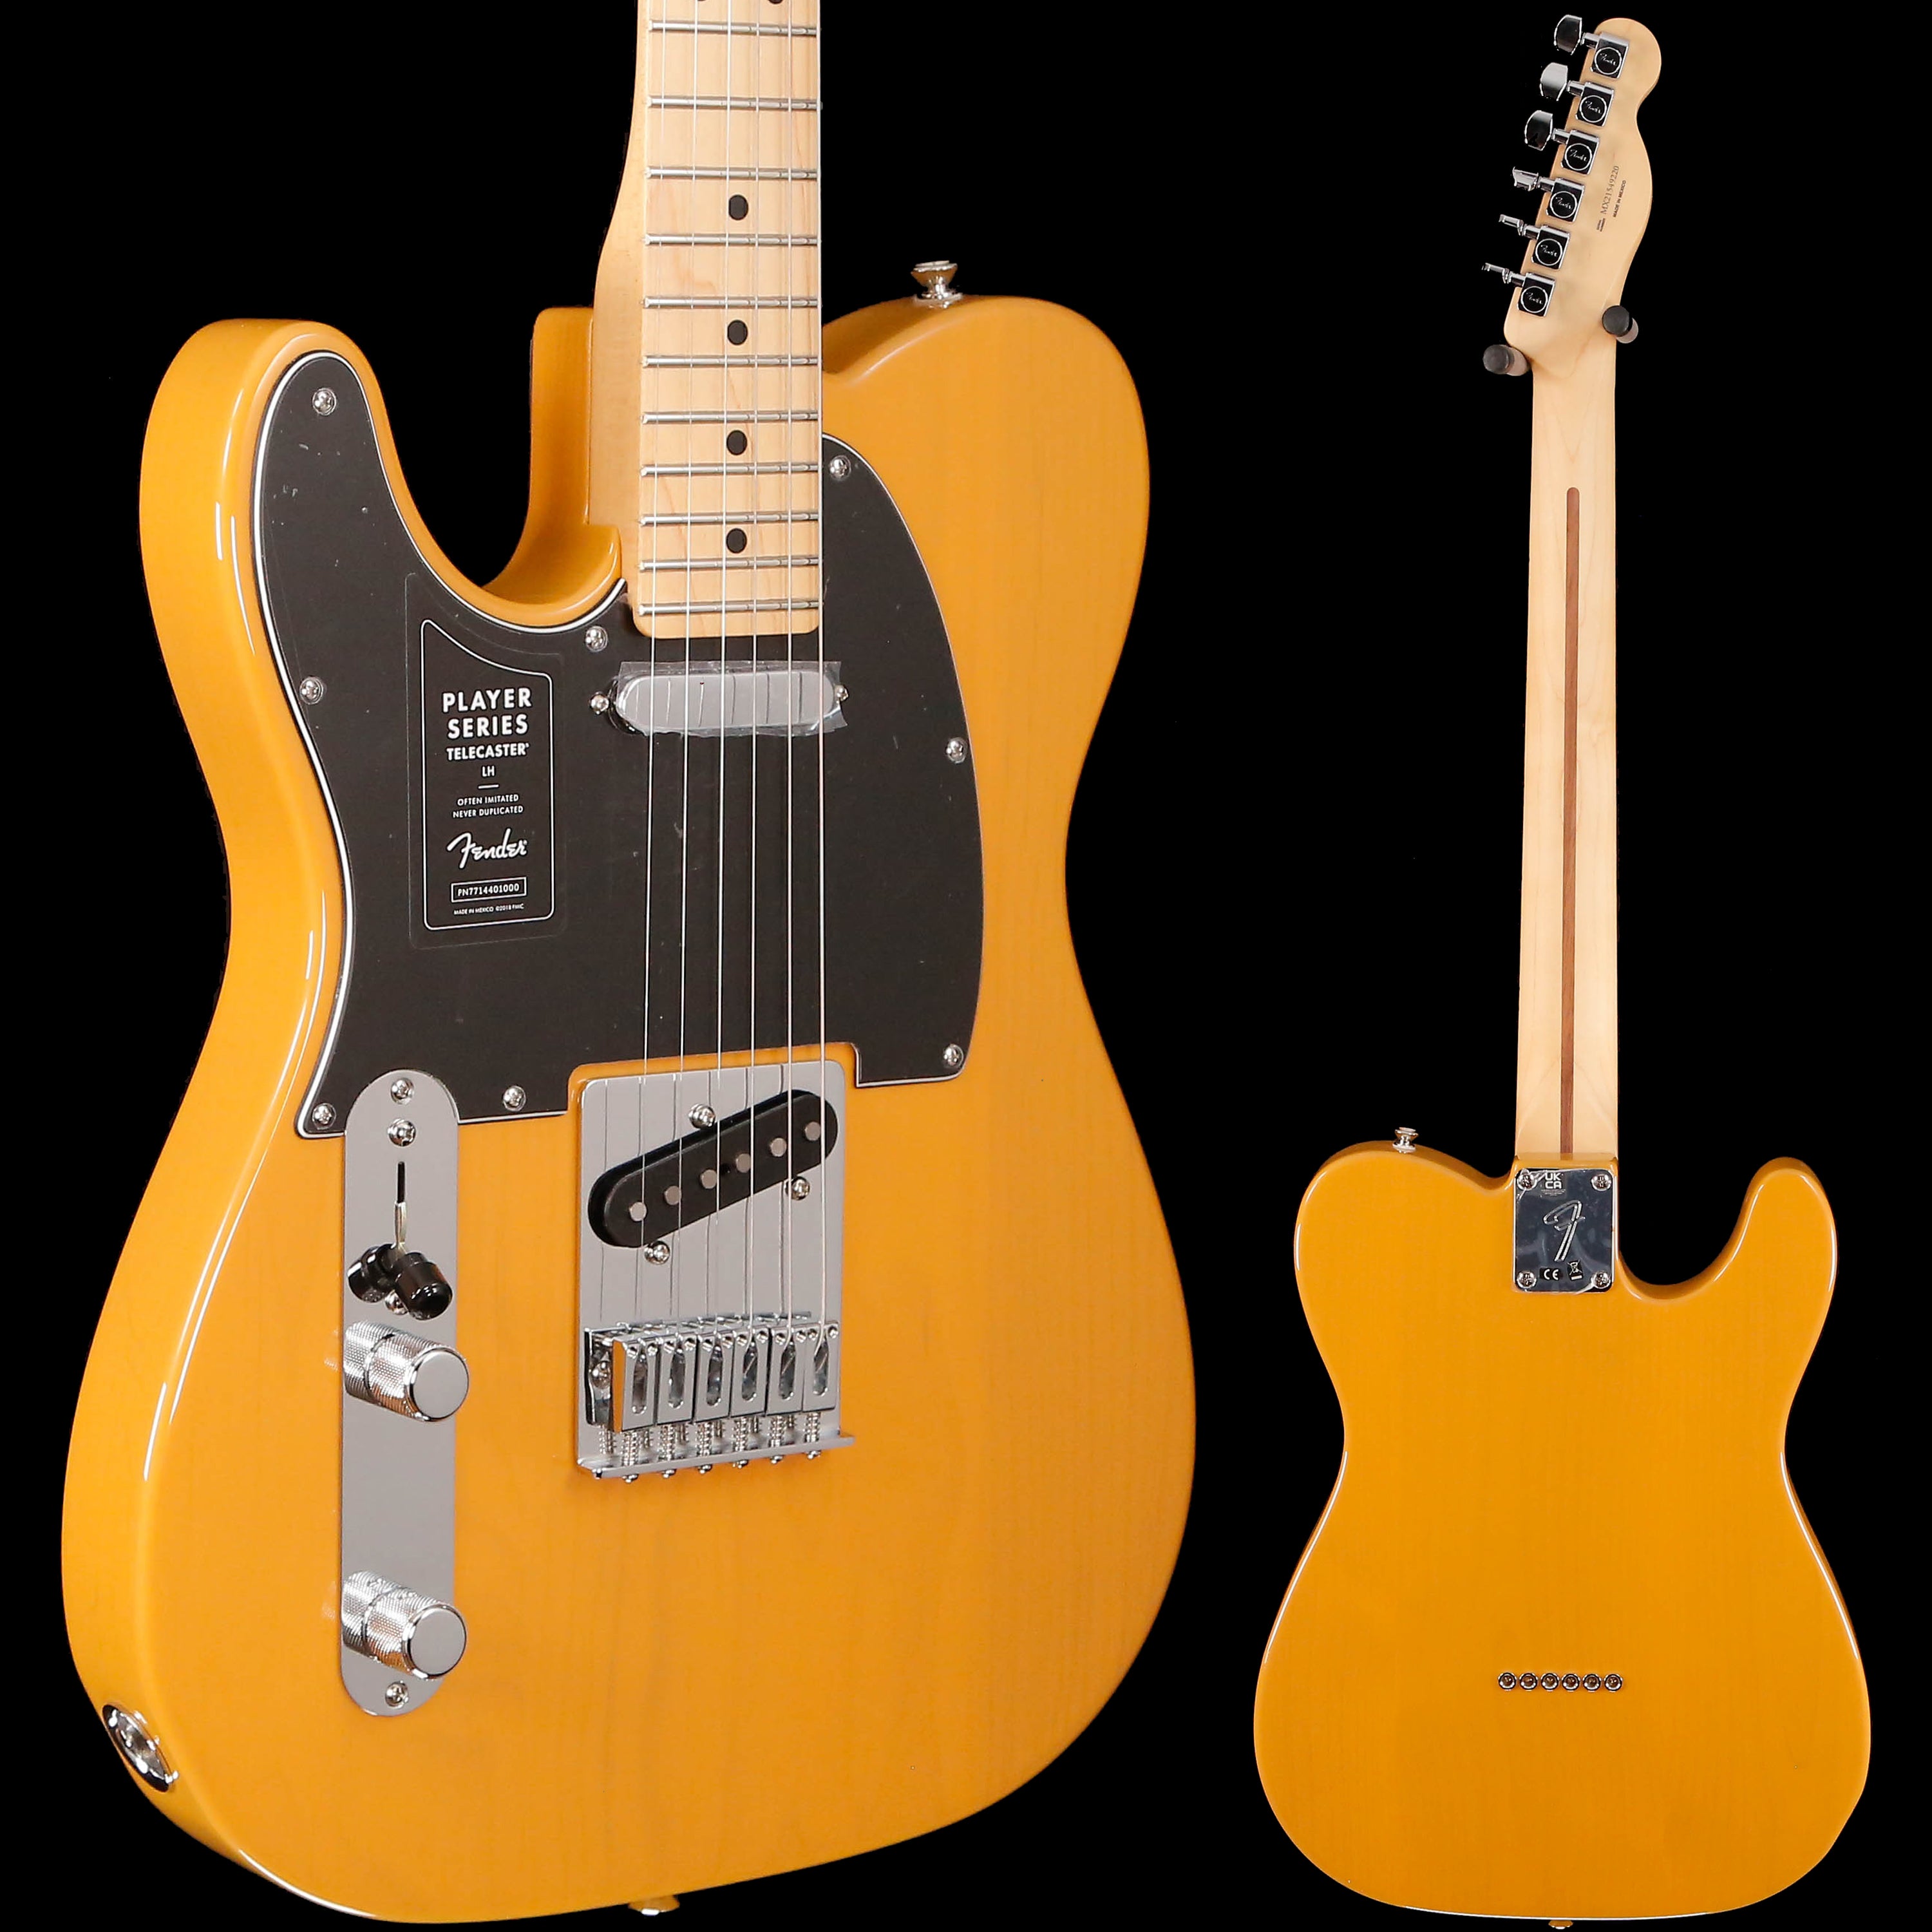 Fender Player Telecaster Left-Hand, Maple Fb, Butterscotch Blonde